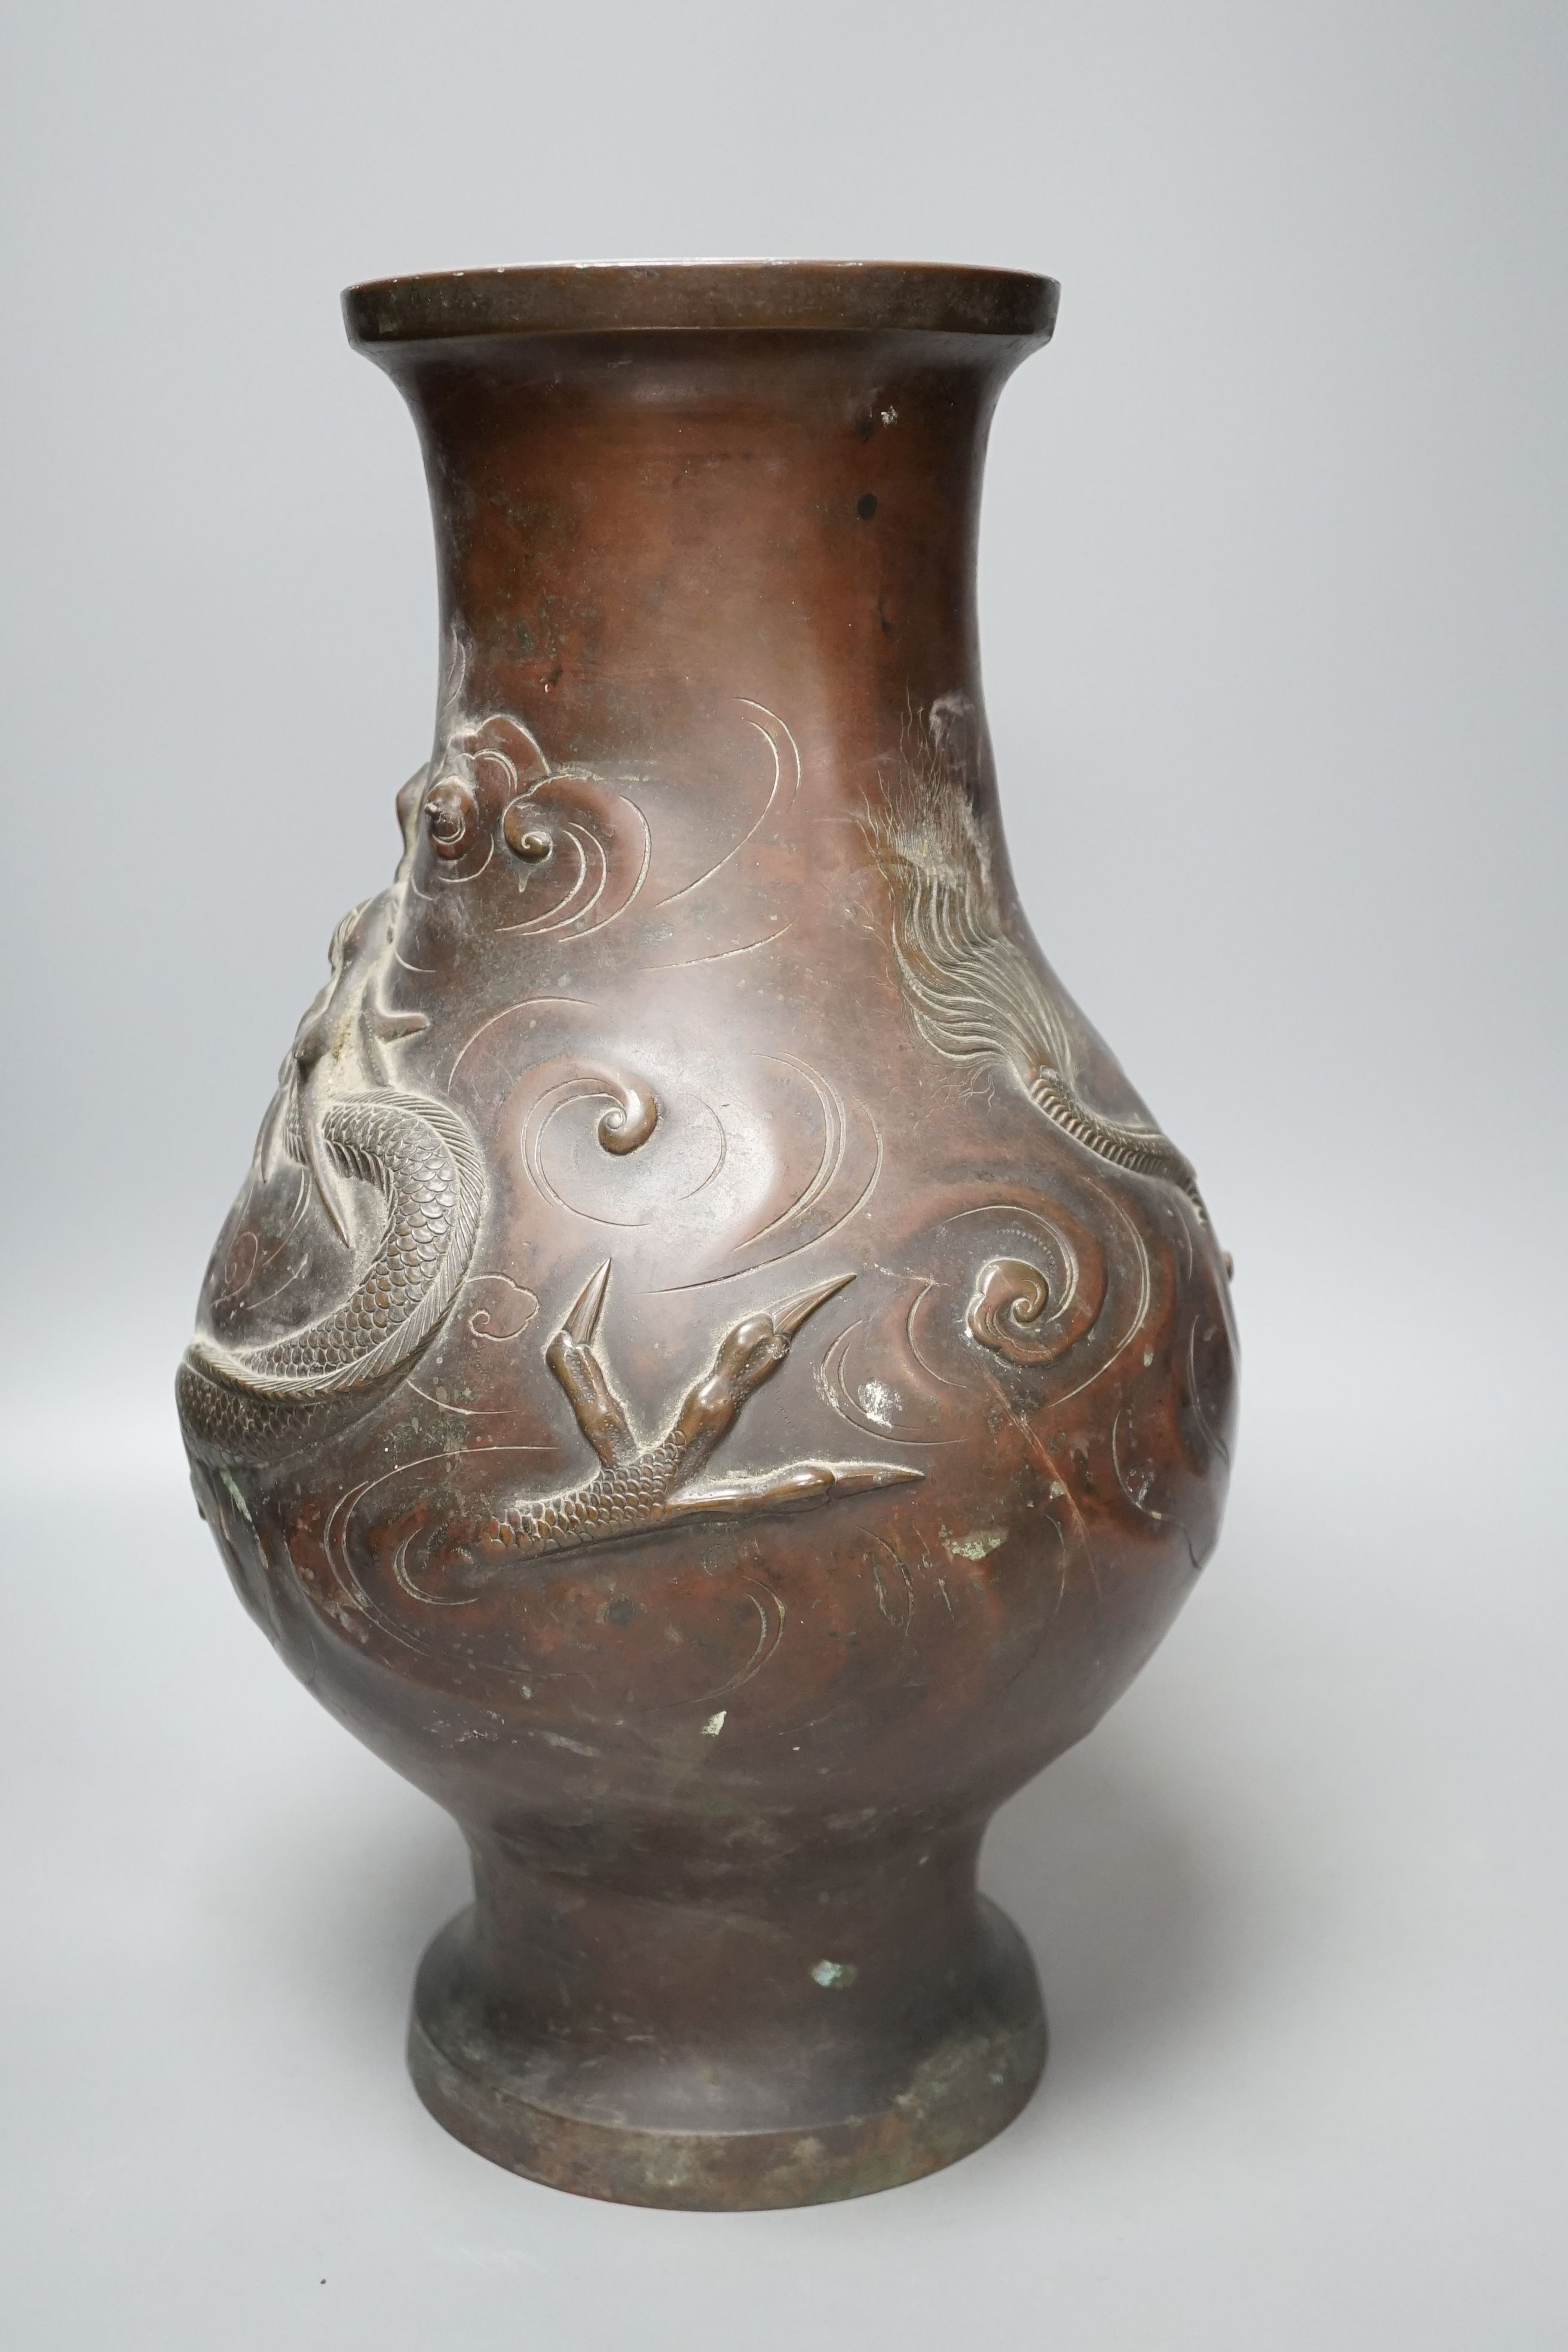 A large 19th century Japanese bronze dragon designed vase, 40cms high.